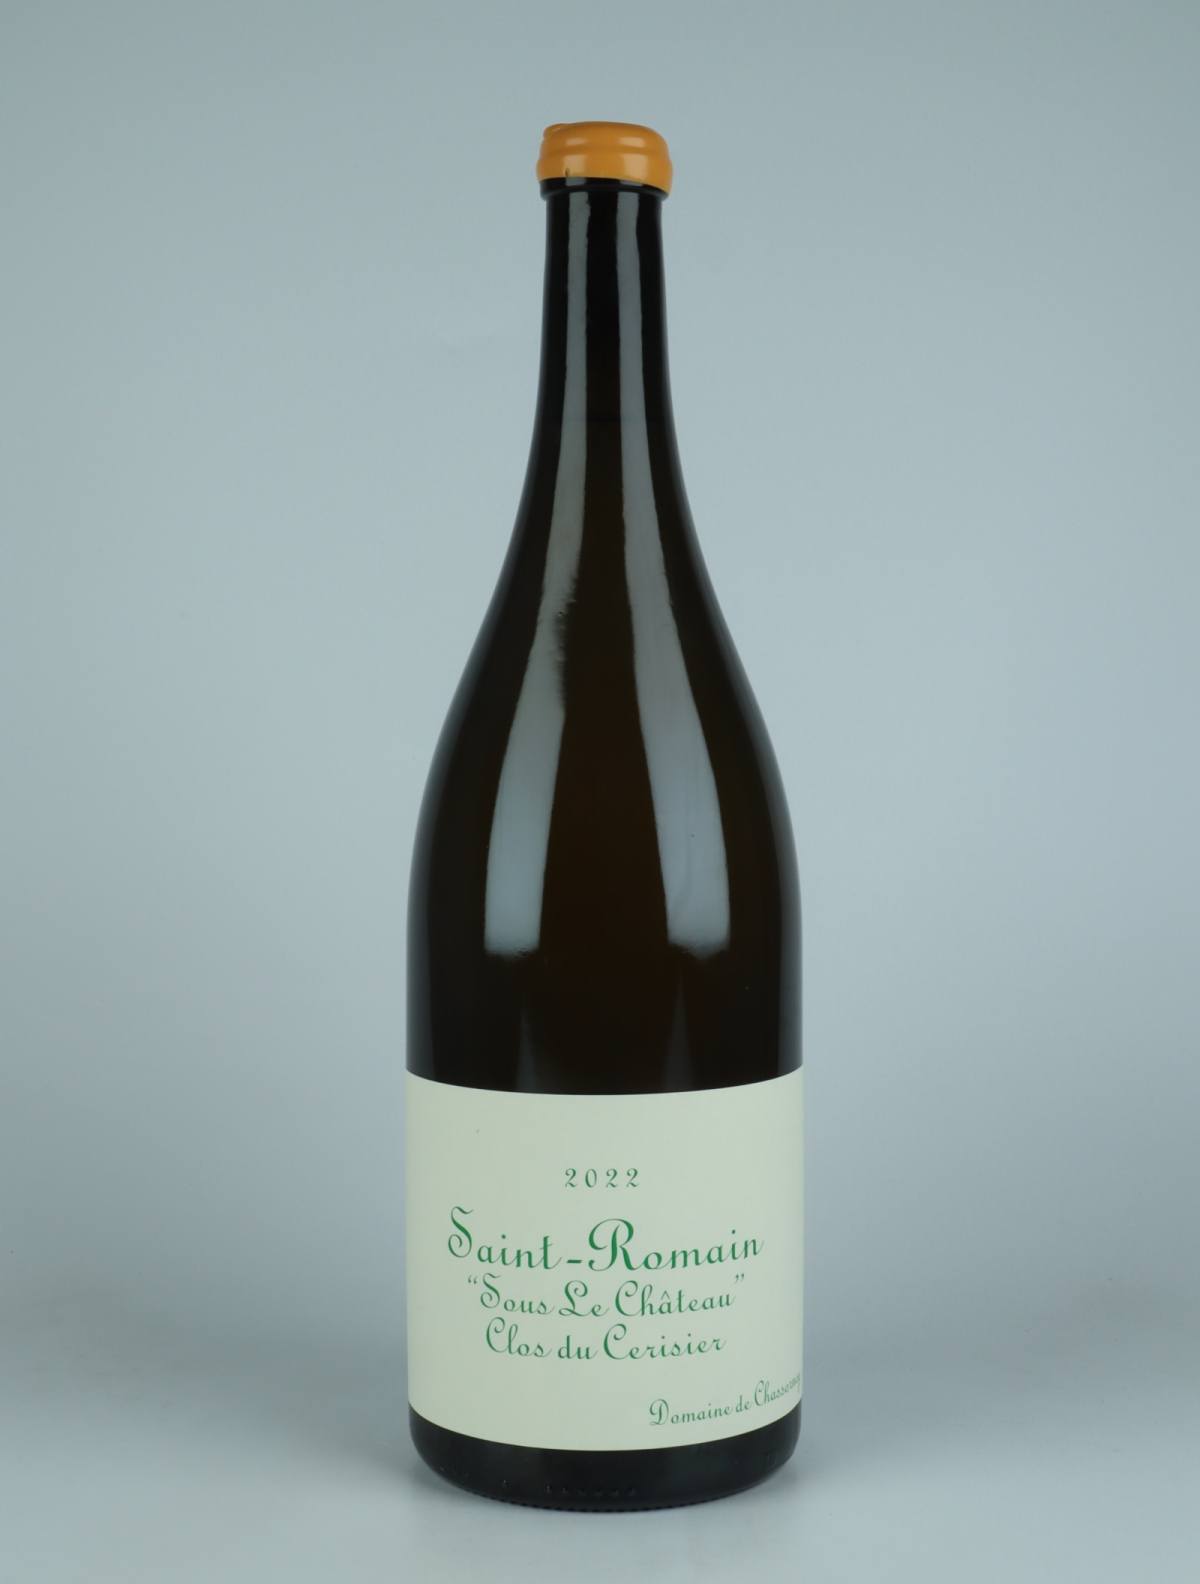 En flaske 2022 Saint Romain Blanc - Clos du Cerisier Hvidvin fra Domaine de Chassorney, Bourgogne i Frankrig